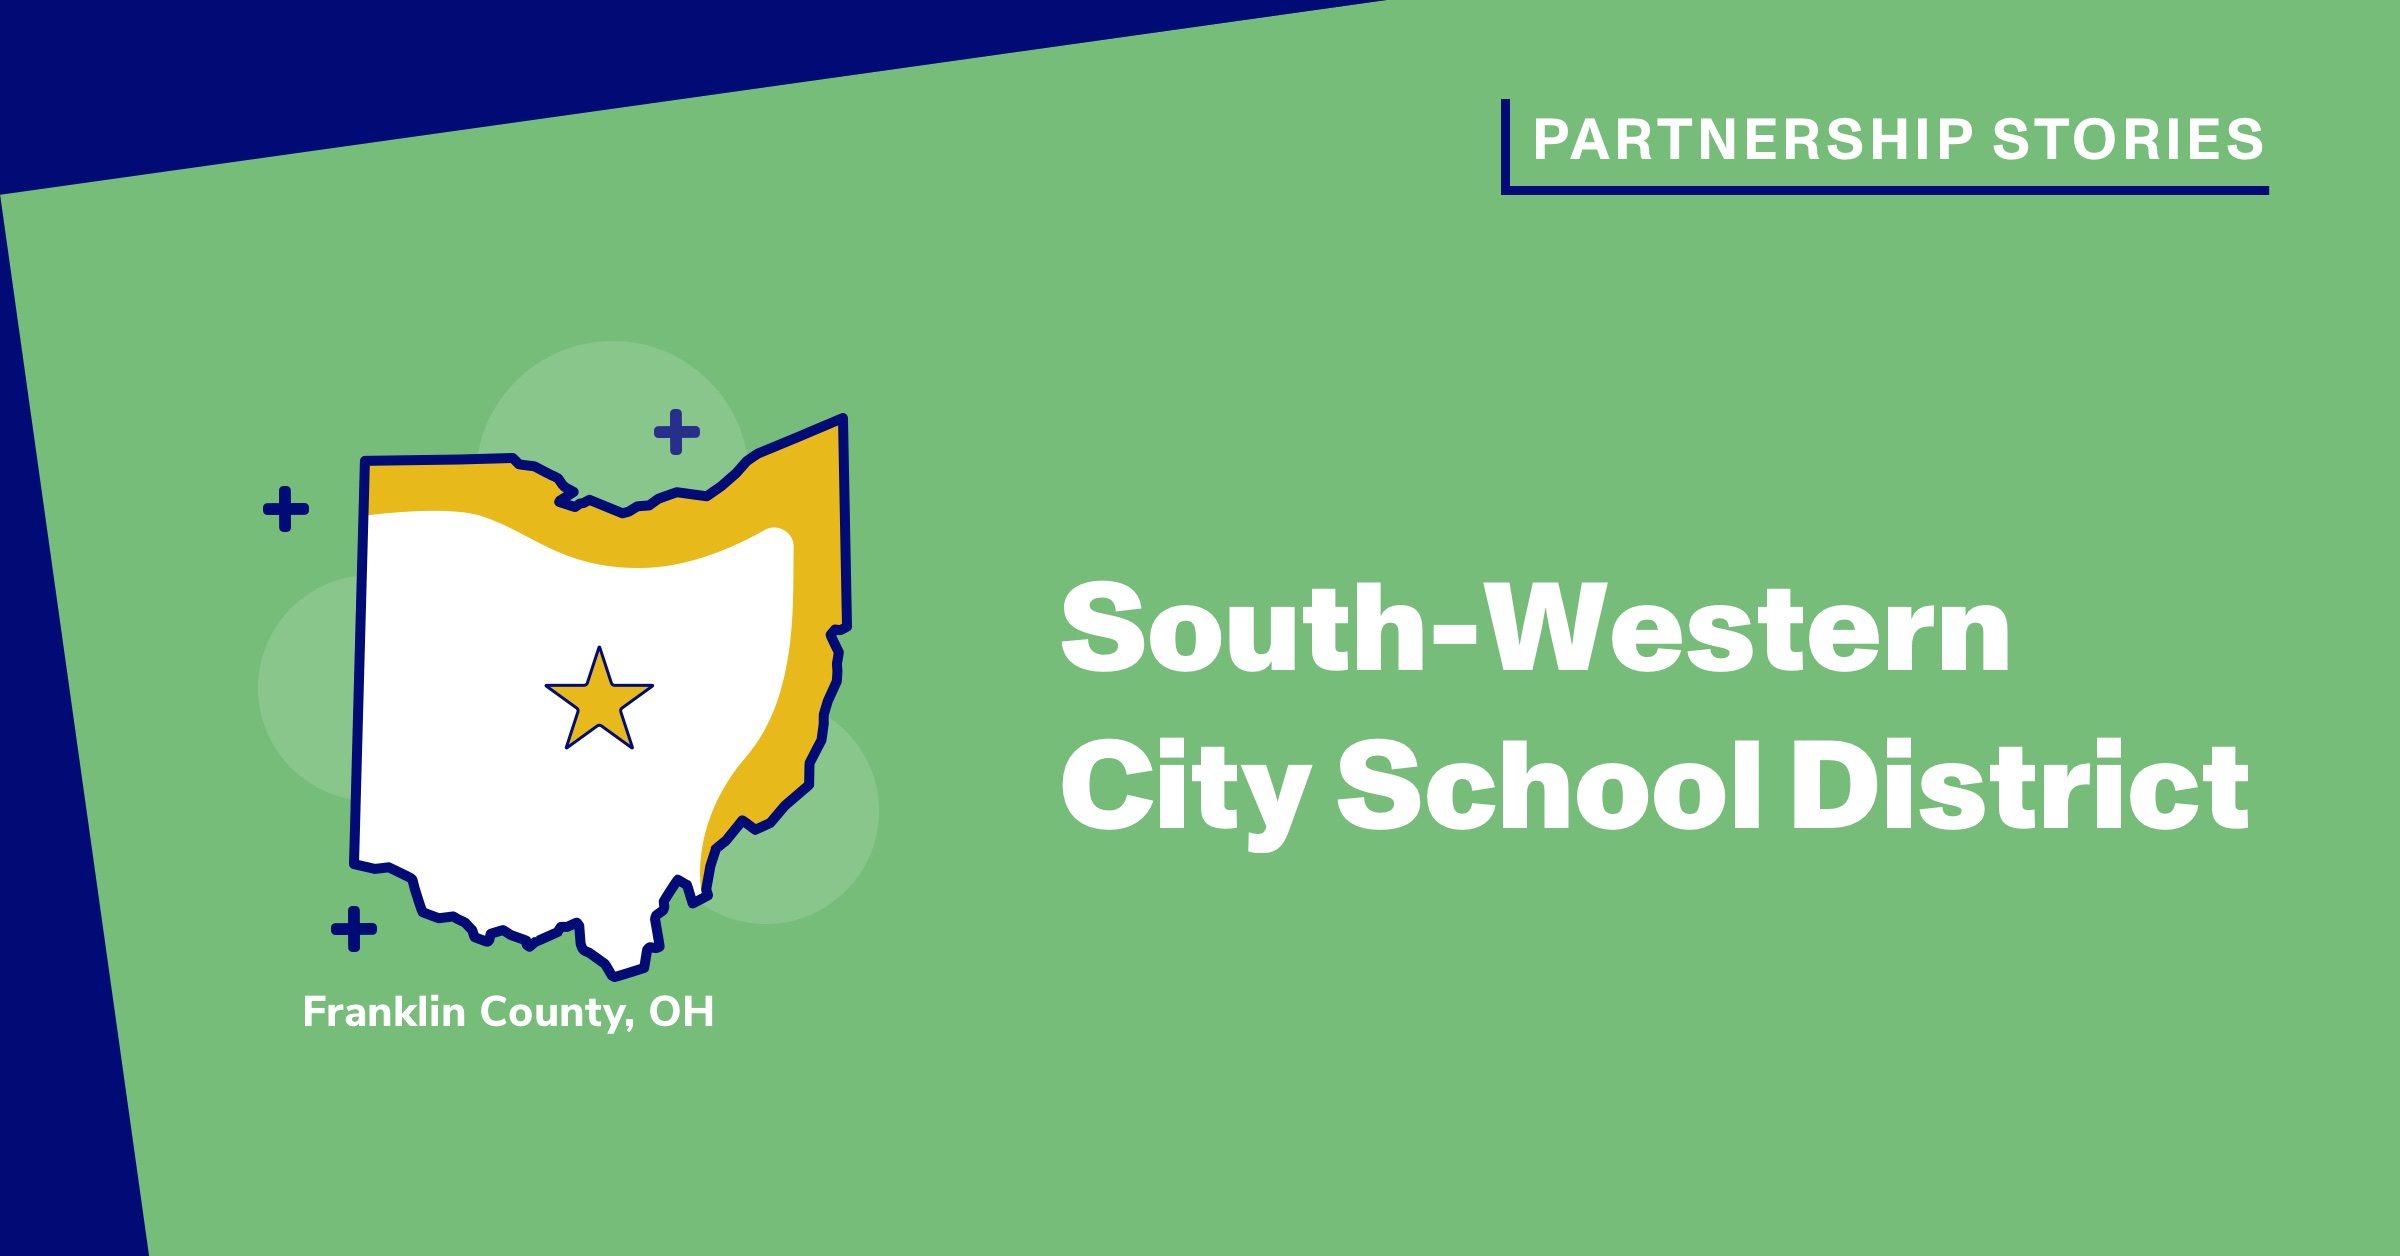 South-Western City School District: Franklin County, Ohio